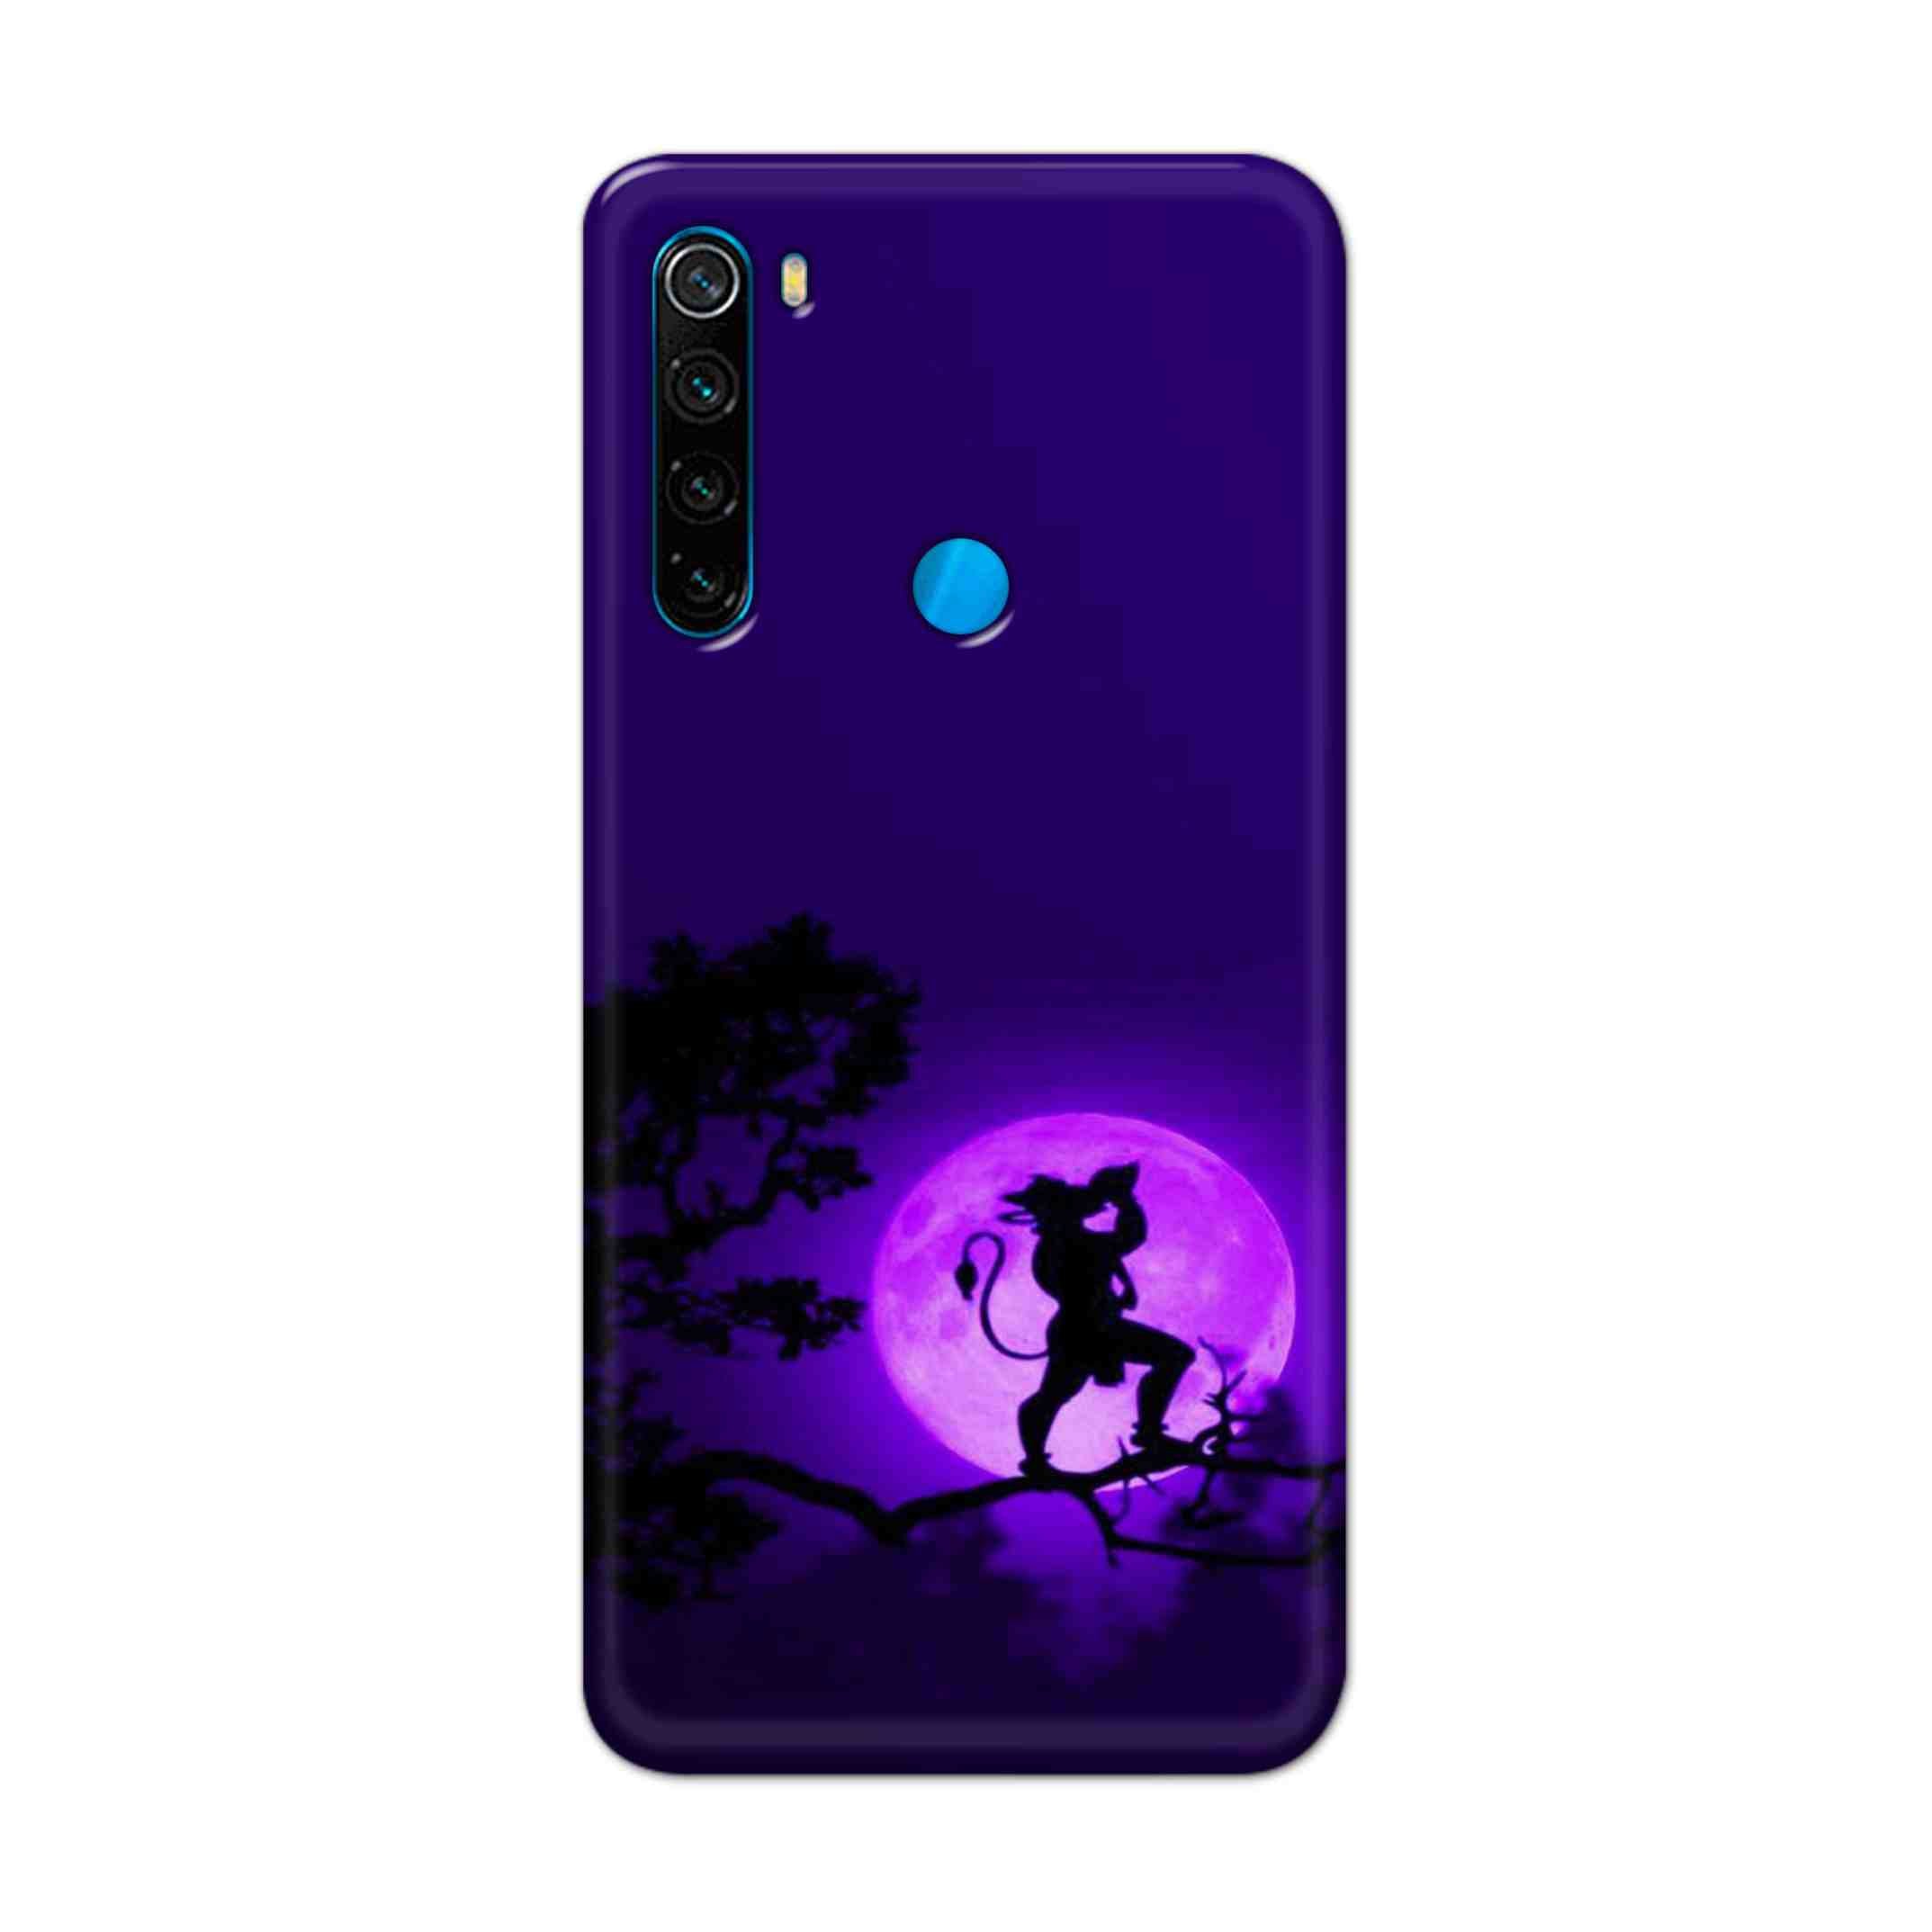 Buy Hanuman Hard Back Mobile Phone Case Cover For Xiaomi Redmi Note 8 Online